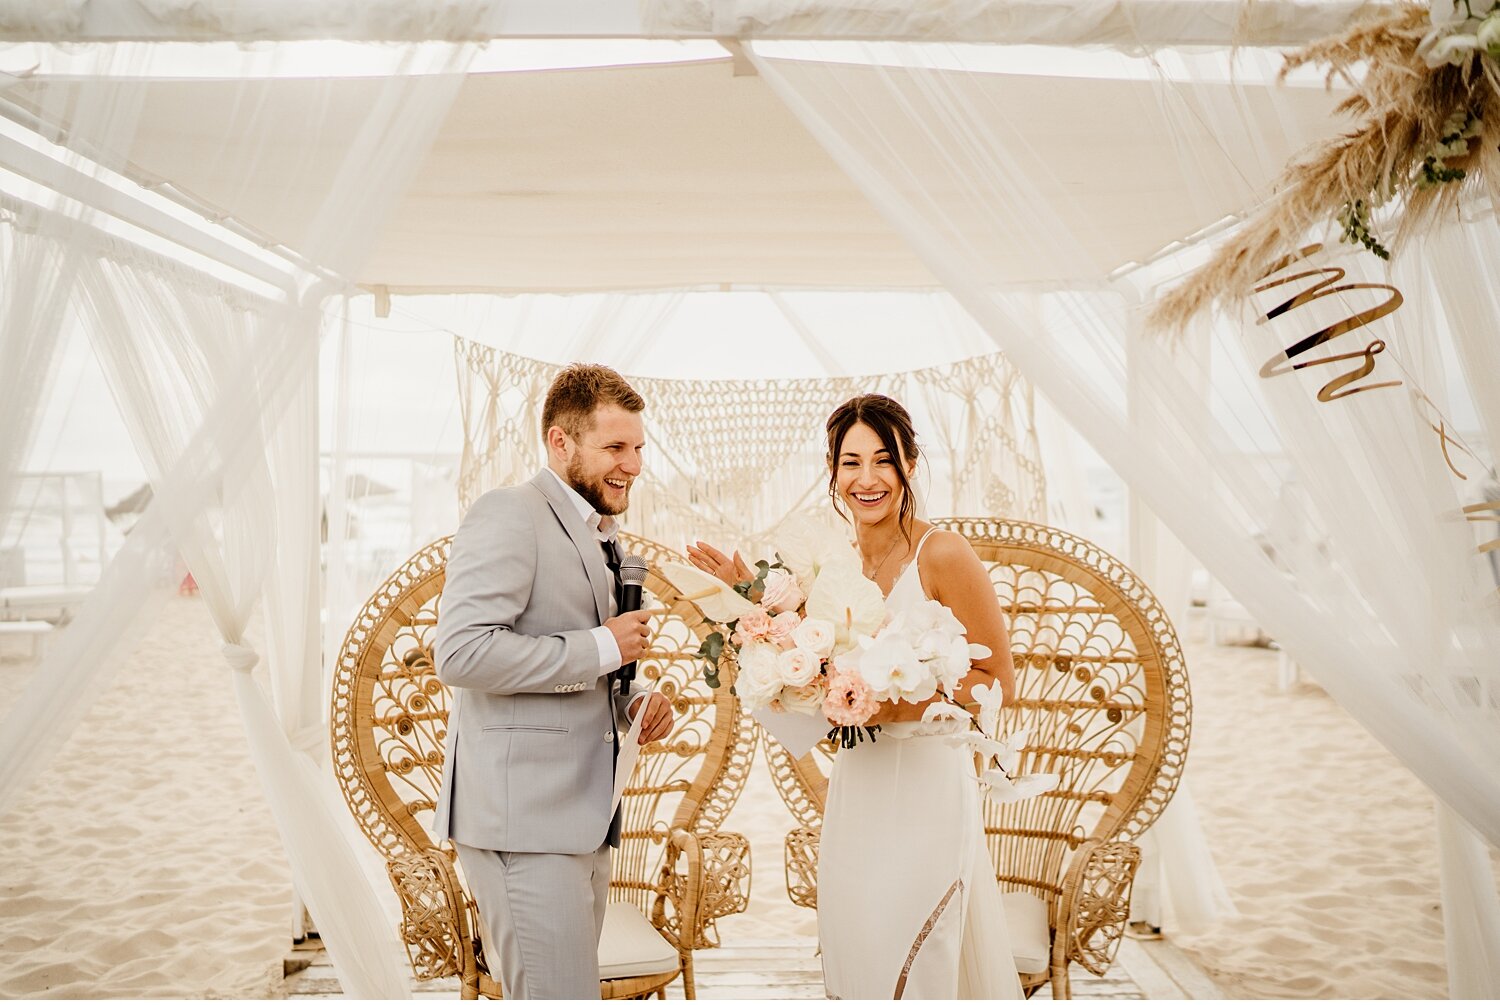 AB Weddings - Kamila i Wiktor - ślub w Portugalii - 125.JPG